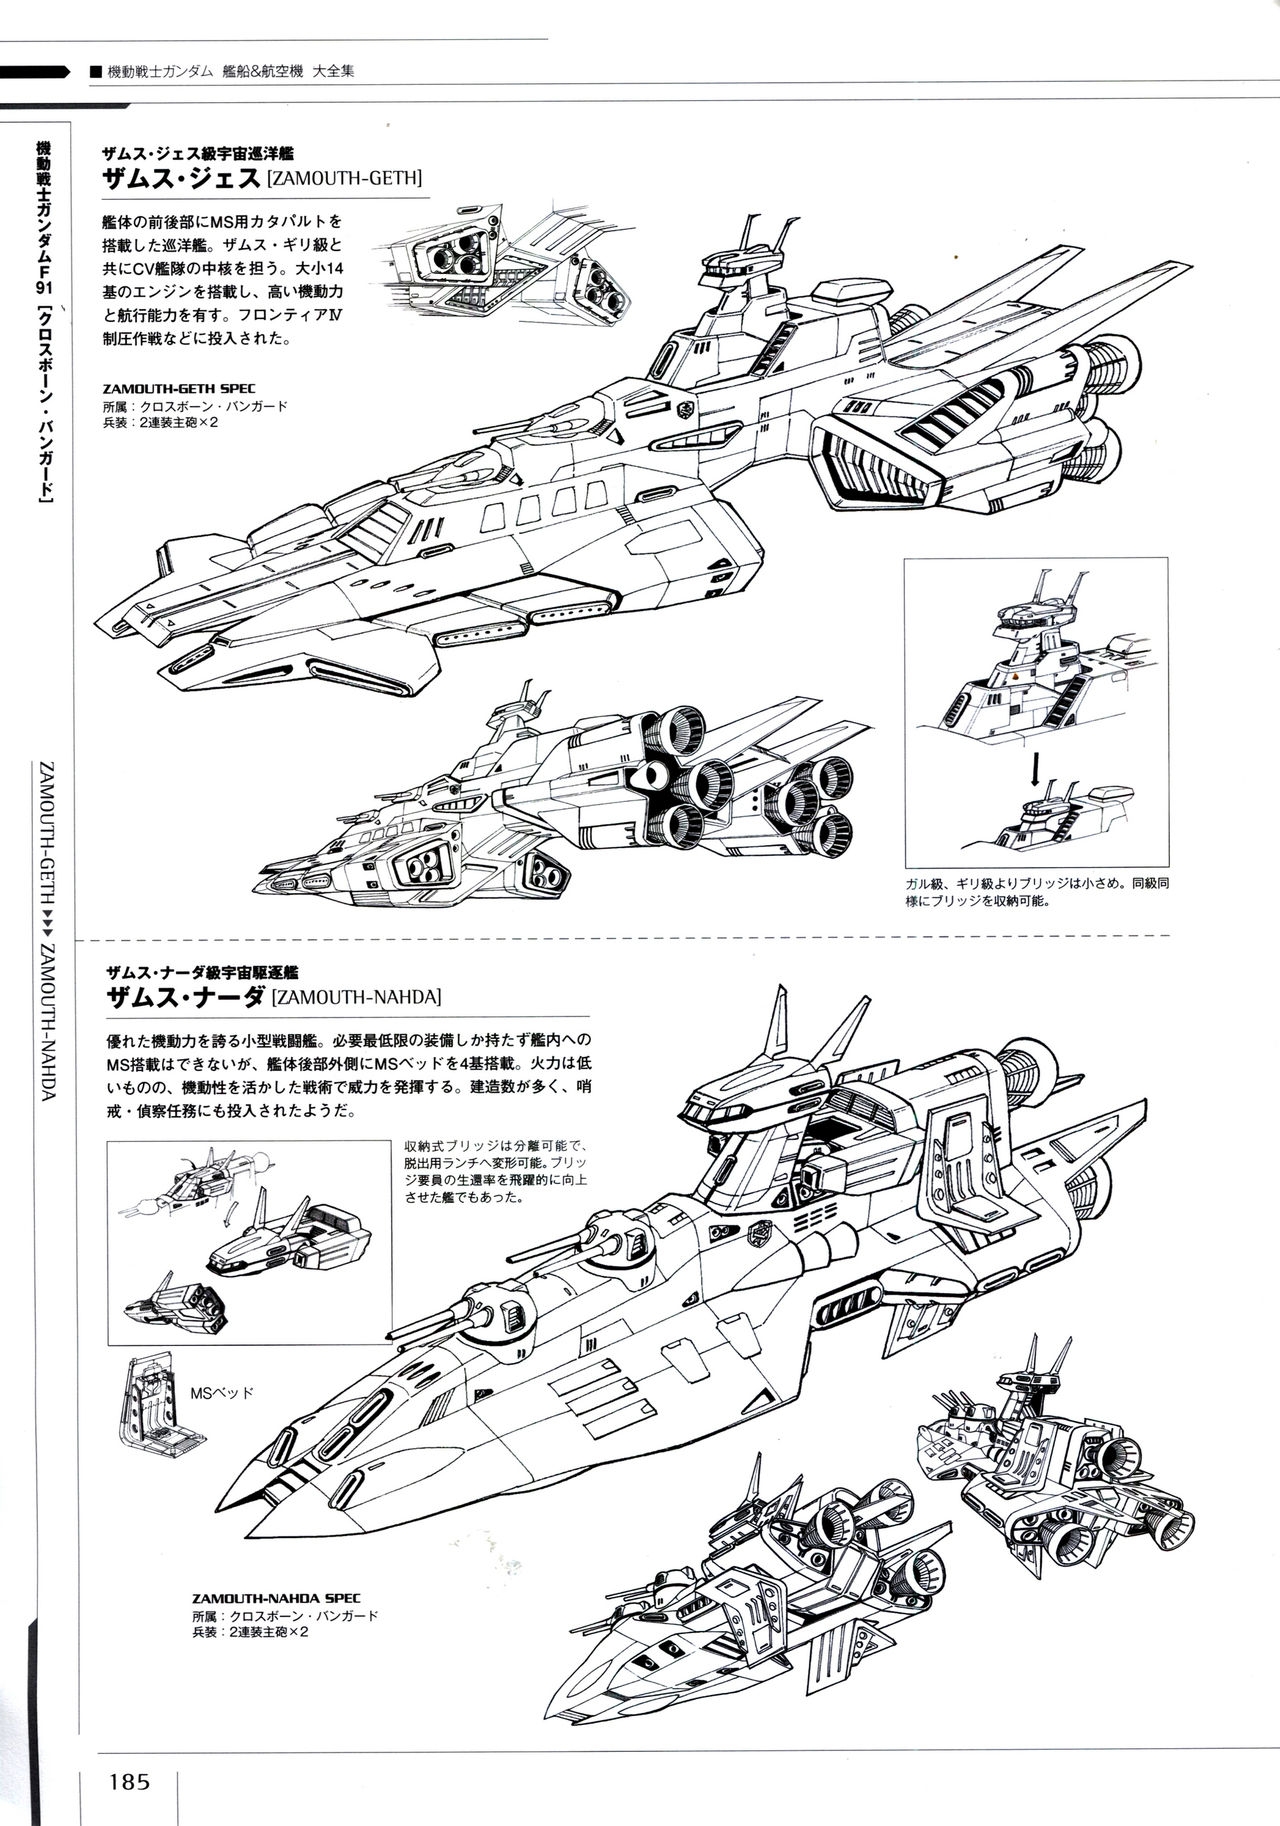 Mobile Suit Gundam - Ship & Aerospace Plane Encyclopedia - Revised Edition 190